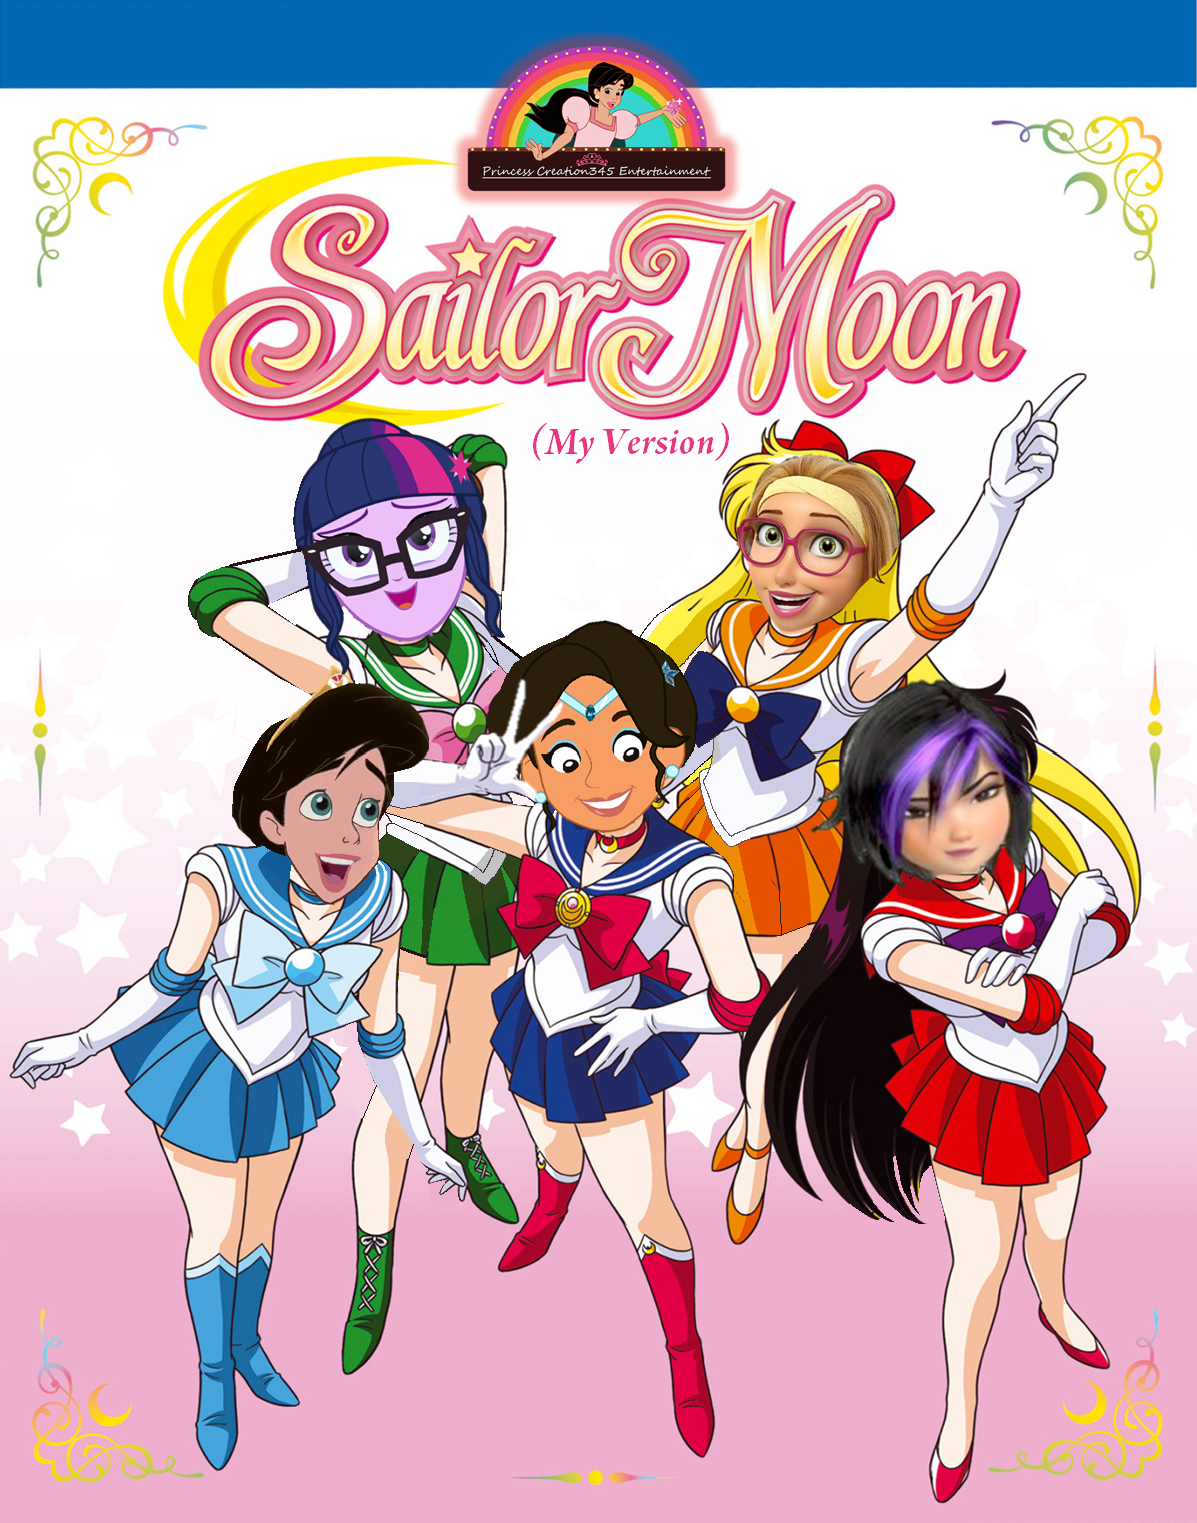 Classeur Disney Princess Feat Sailor Moon à petits prix